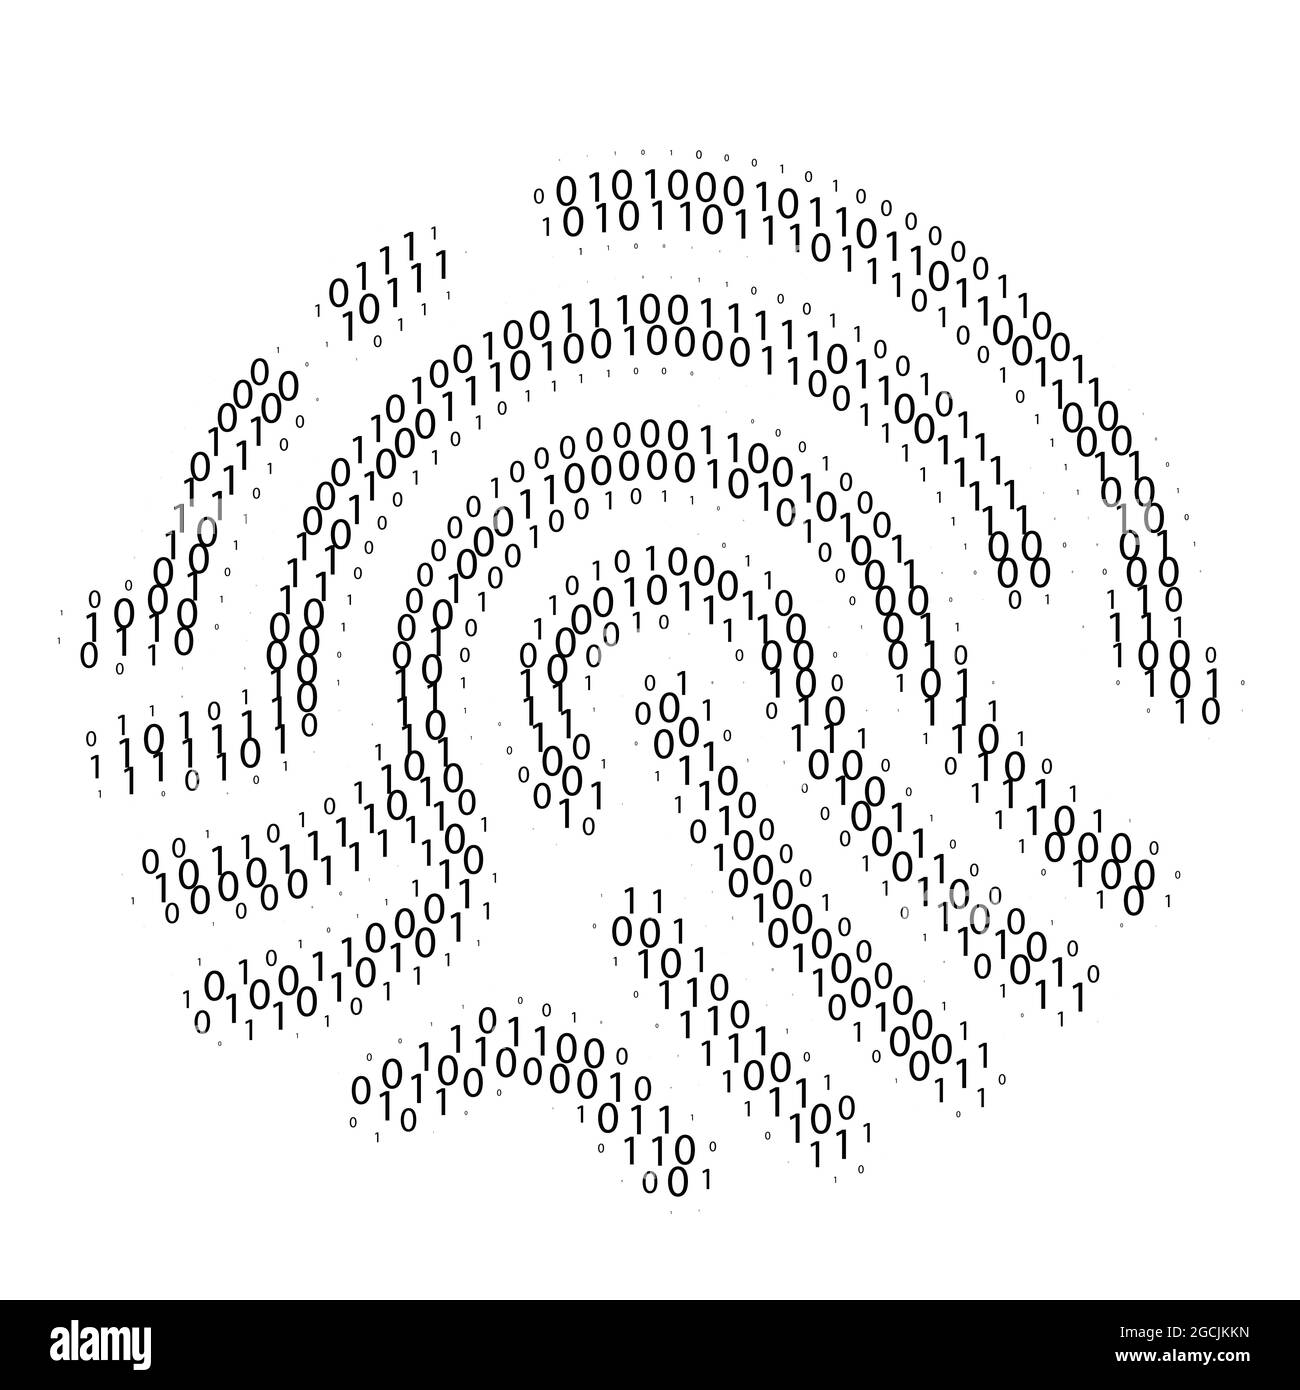 Binärcode des Fingerabdrucks. Datenzugriff oder -Überprüfung. Digitale Identifikation. Vektorgrafik Stock Vektor